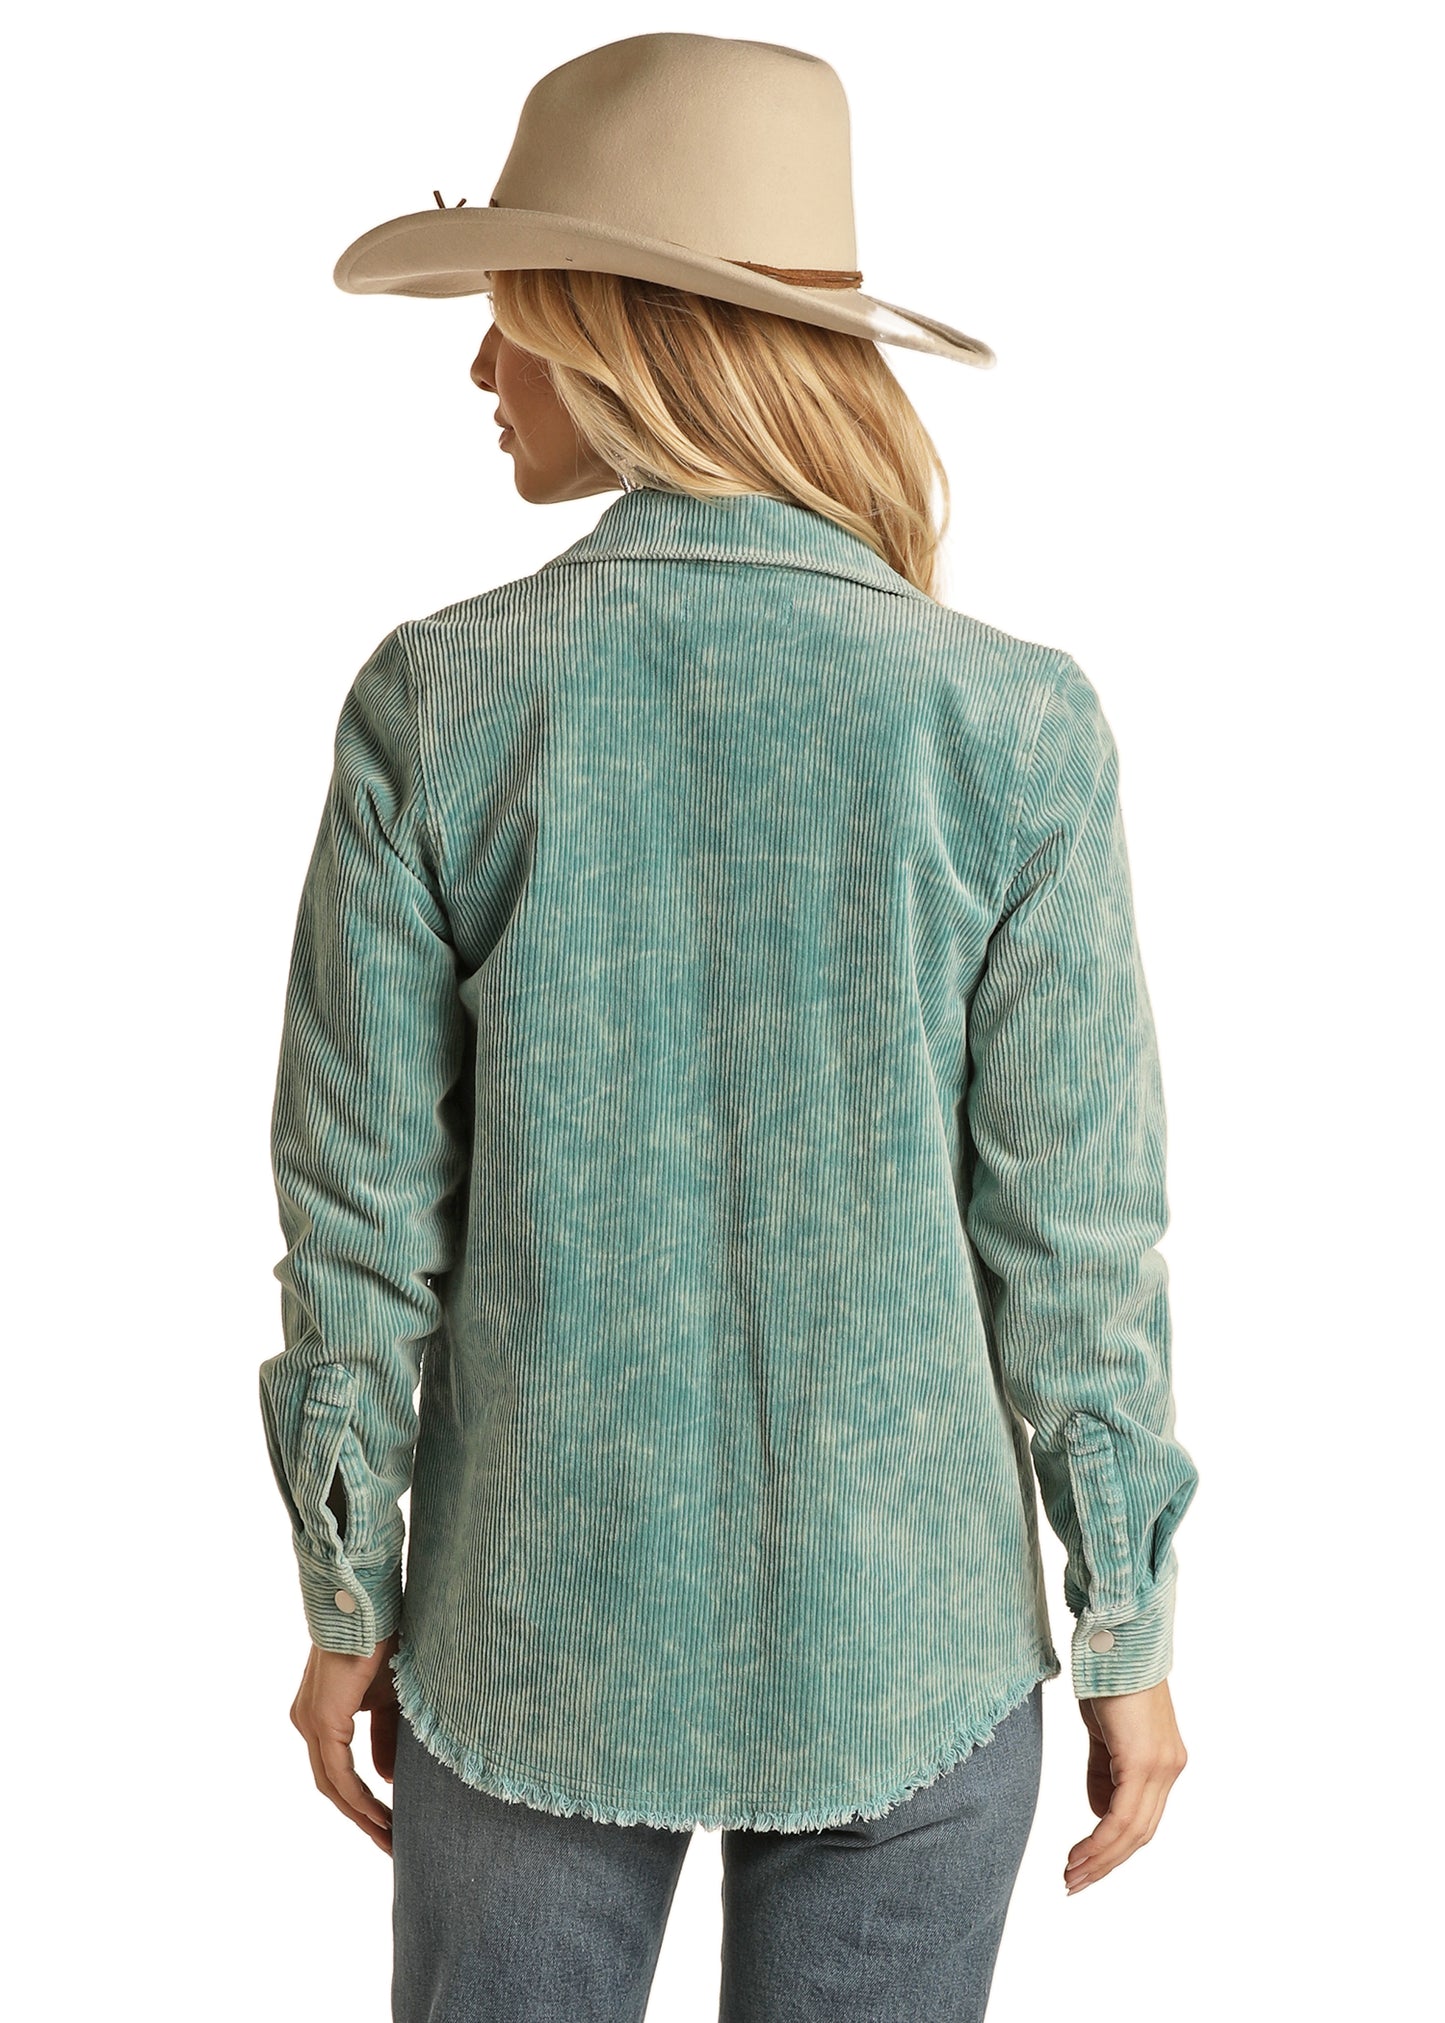 Rock & Roll Cowgirl Women's Corduroy Shirt Light Turquoise